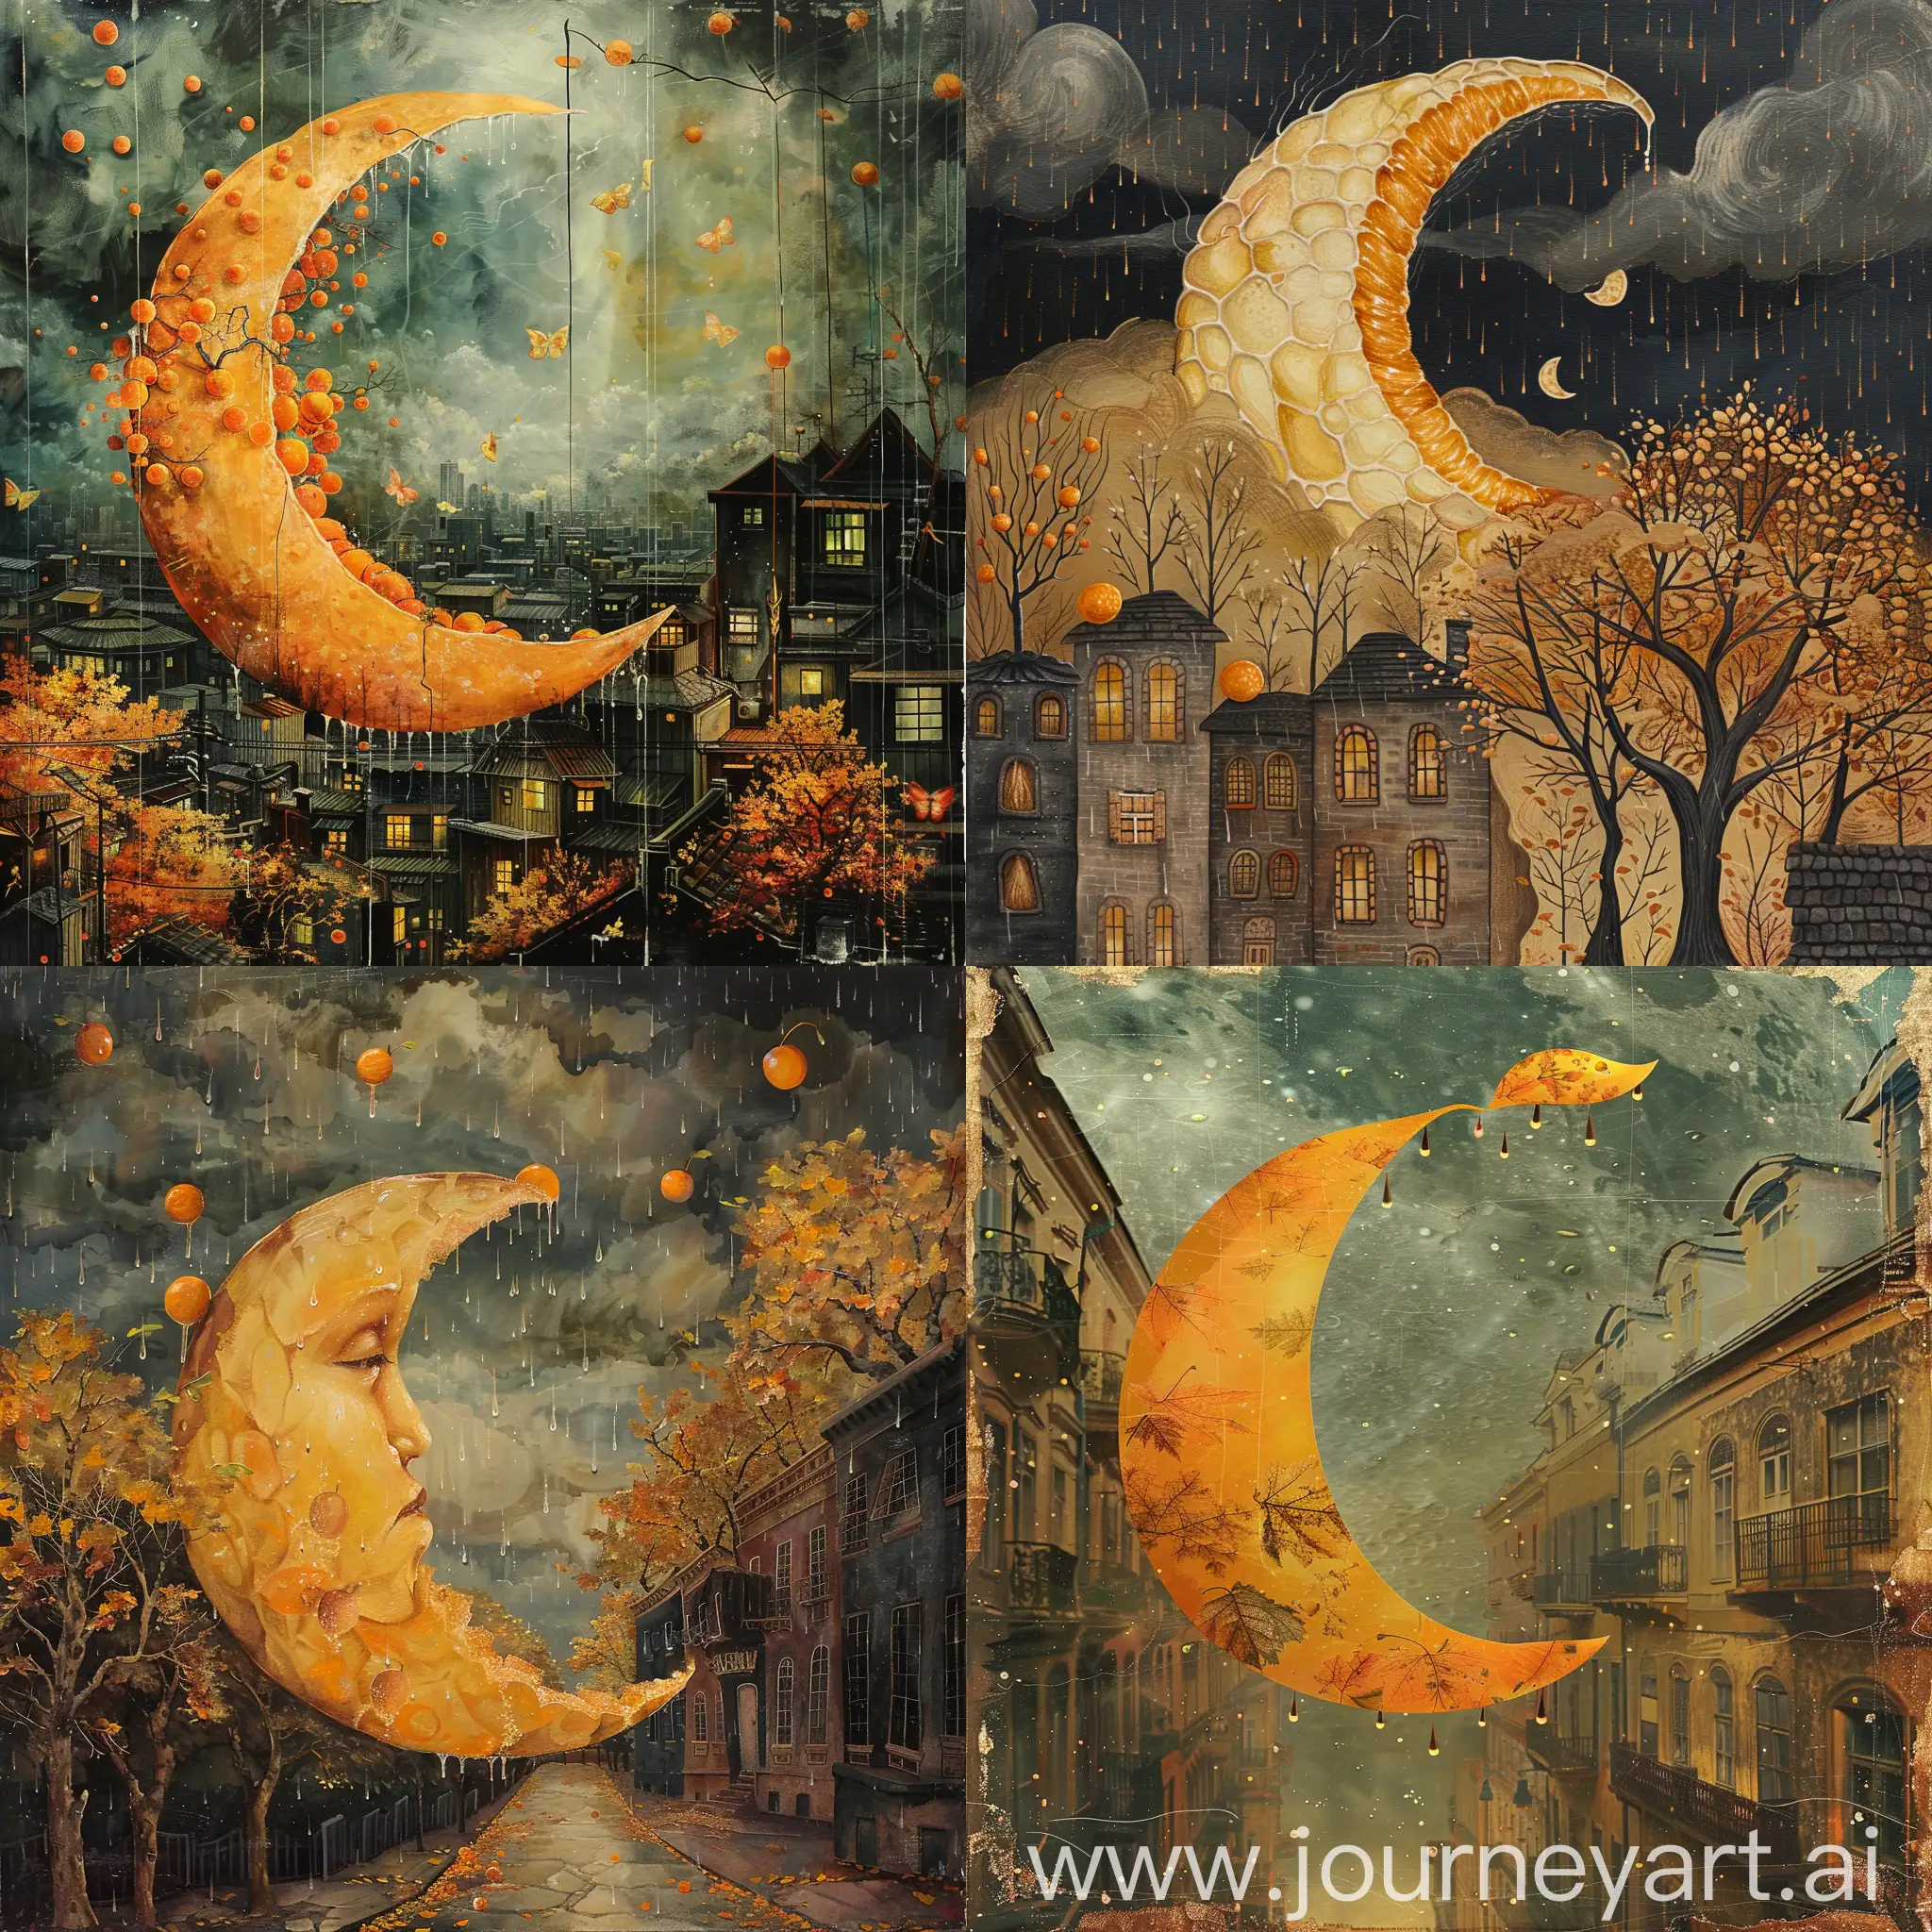 Enchanting-Autumn-Moonlit-Flight-Dreamy-Fairy-Tale-Imagery